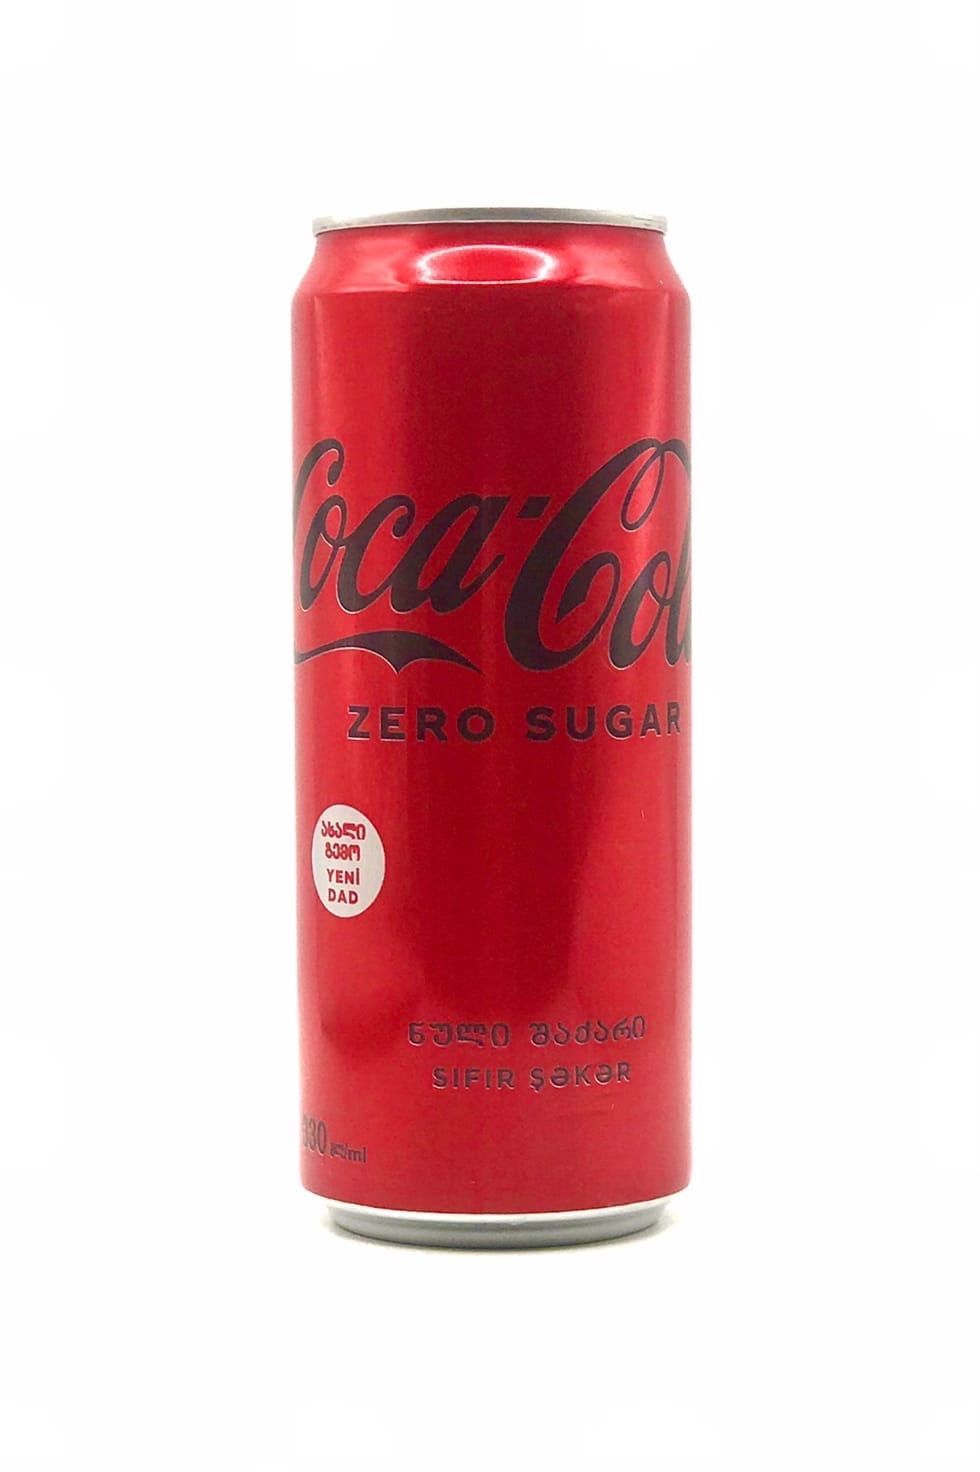 Coca Cola Azerbaijan. Напитки Азербайджан напитки напитки. Фанта 300 мл жб Афганистан. Напиток "Coca-Cola" Zero Sugar п\б 1.75л, , шт. G 0 z